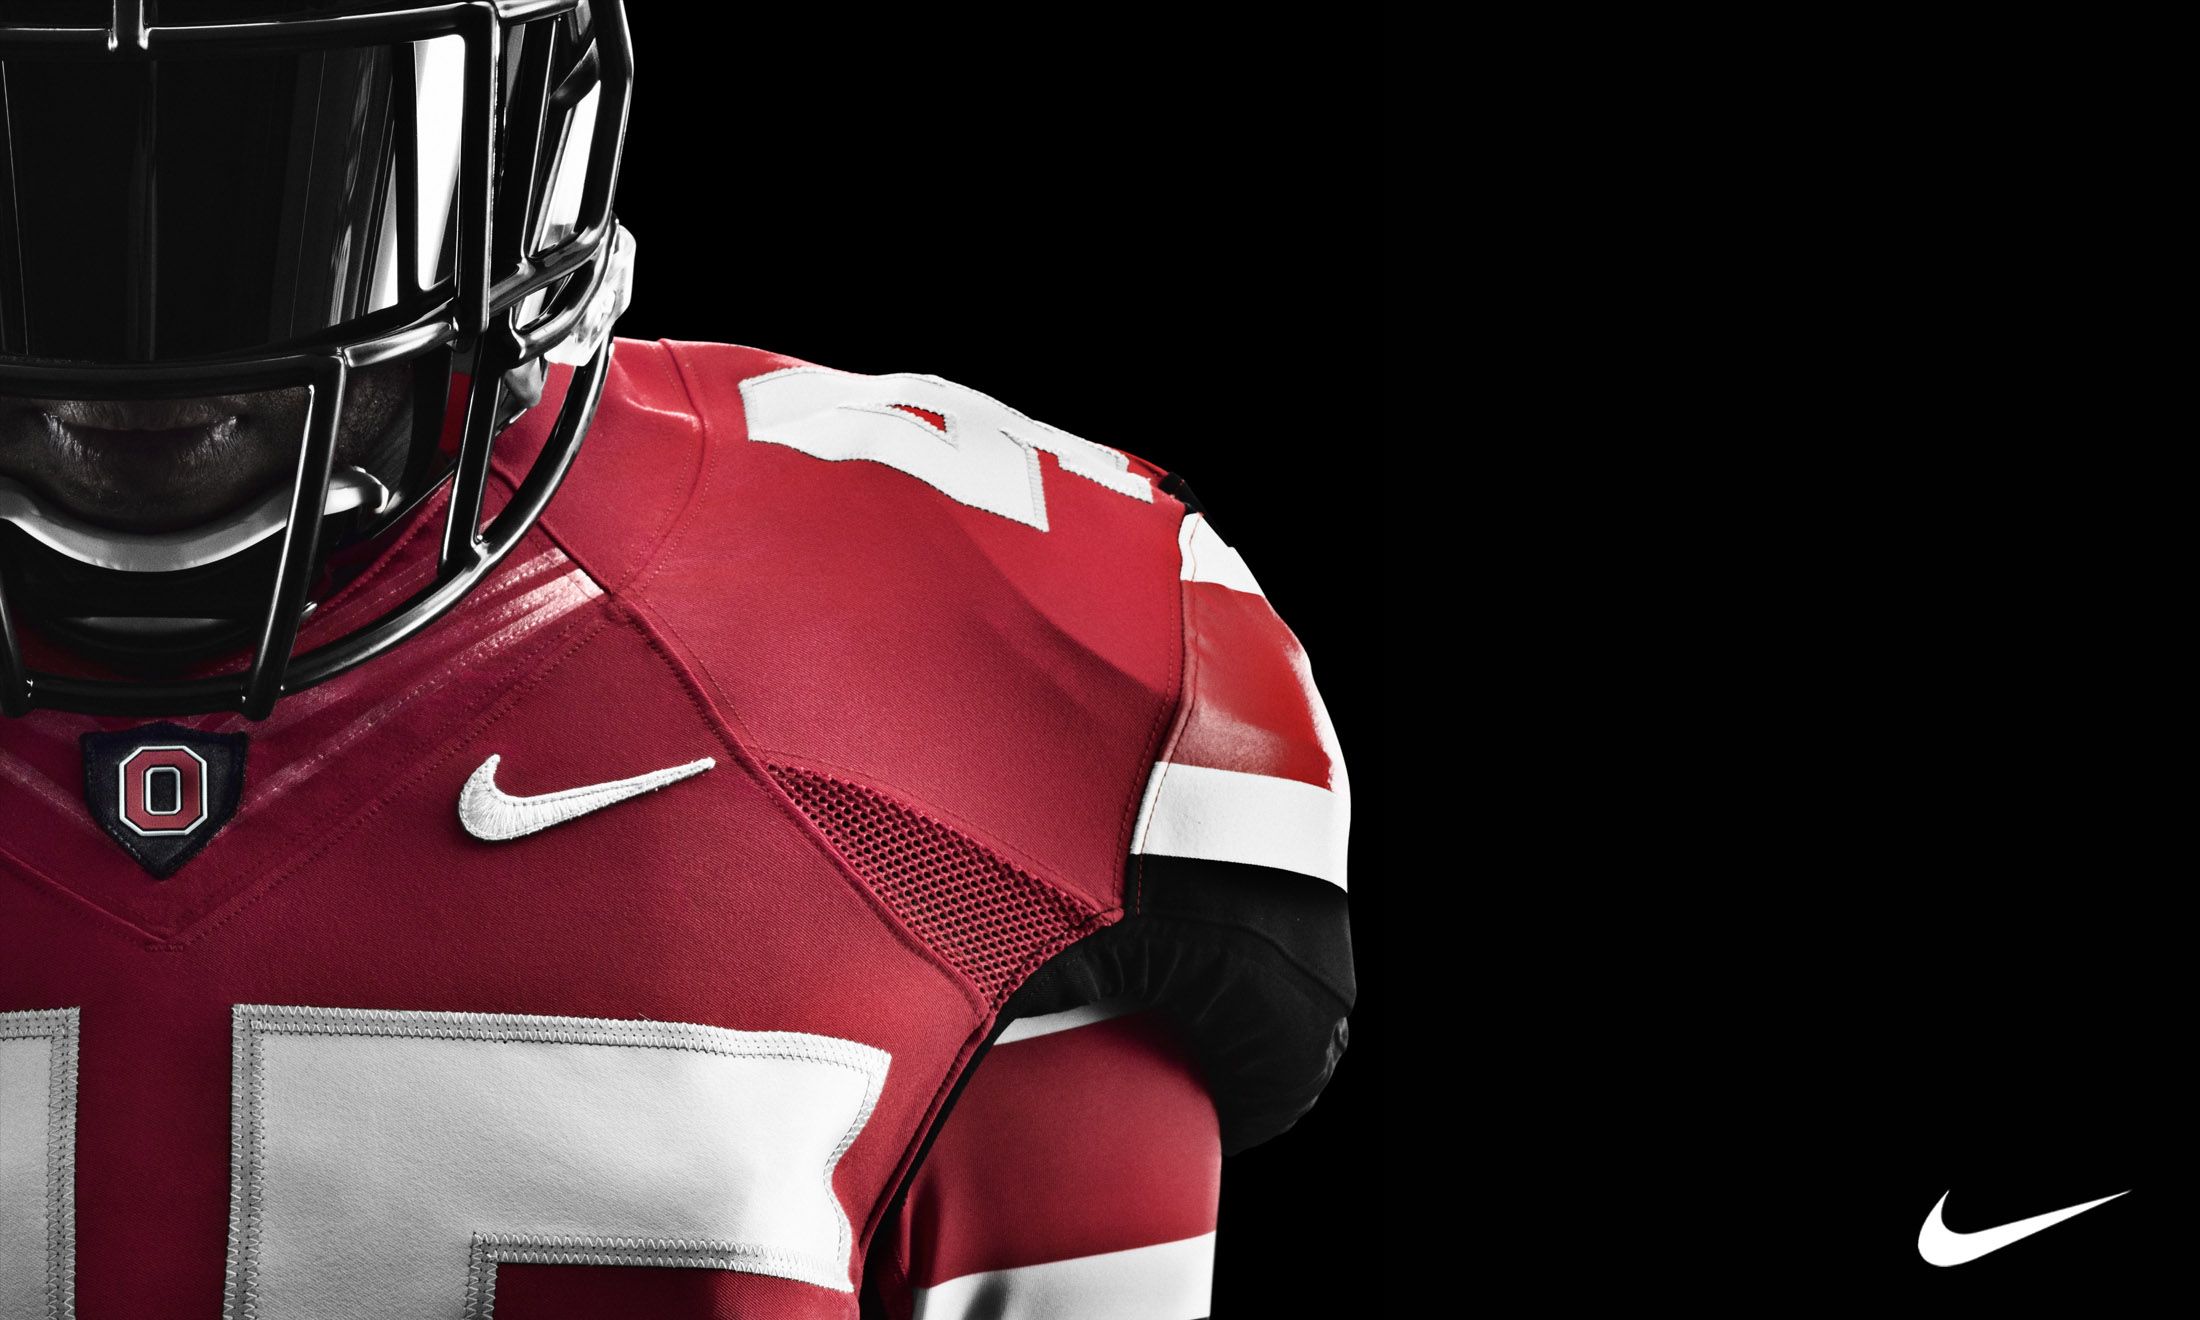 Ohio State Nike Pro Combat Football Uniform Wallpaper Two 2200